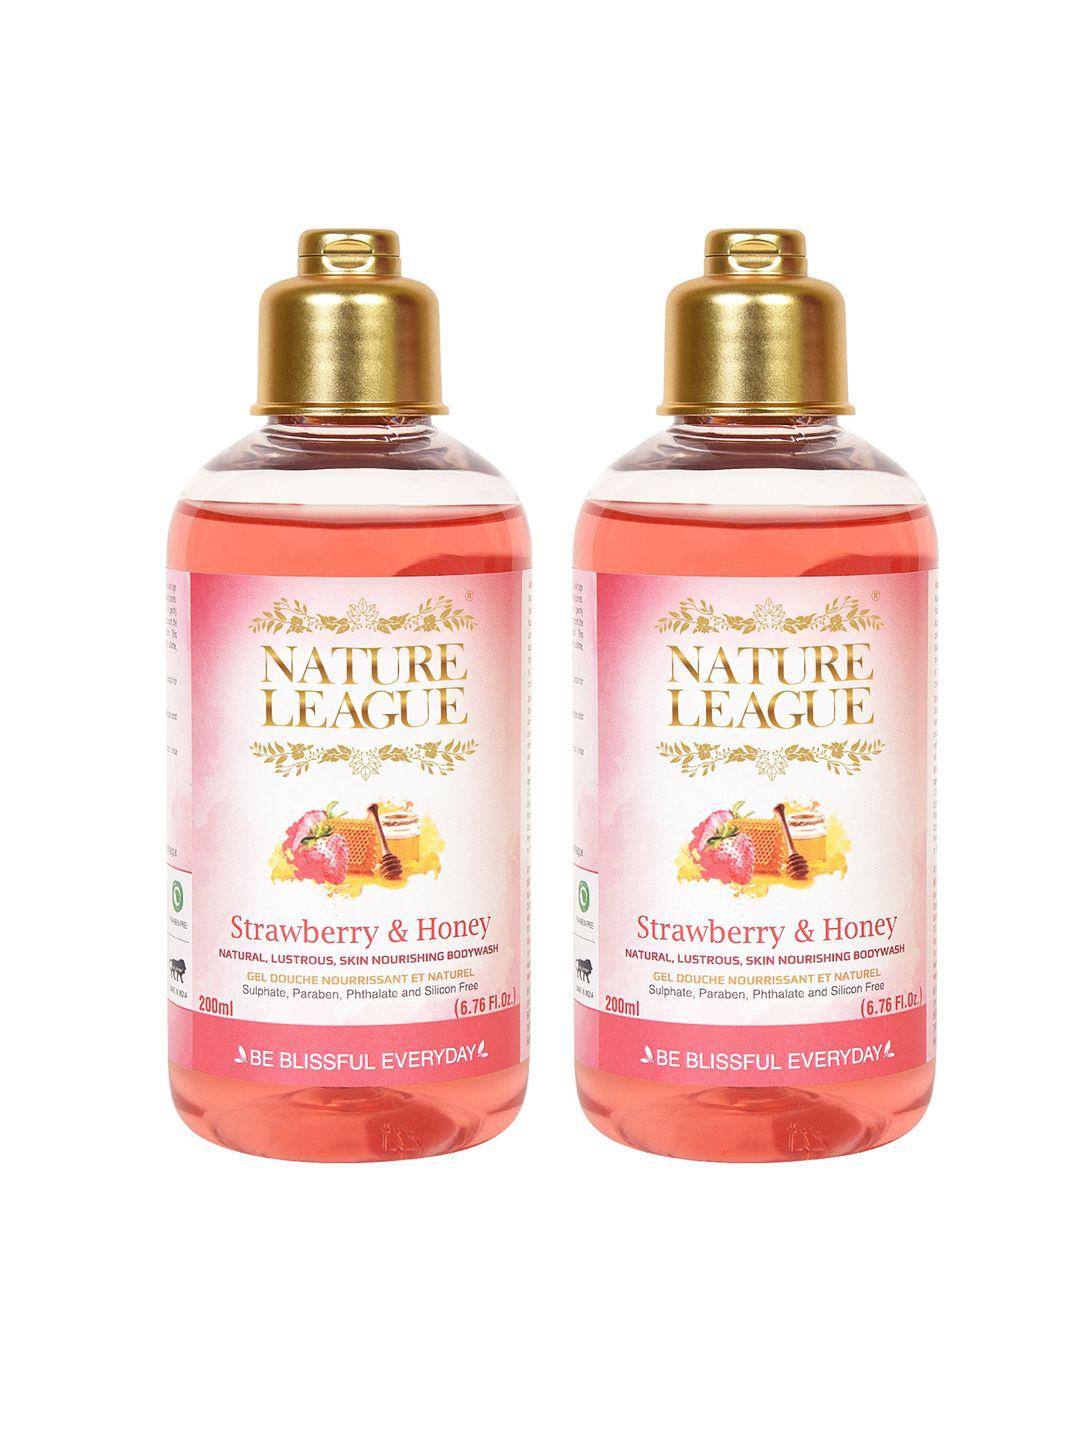 nature league set of 2 strawberry & honey skin nourishing body wash - 200 ml each